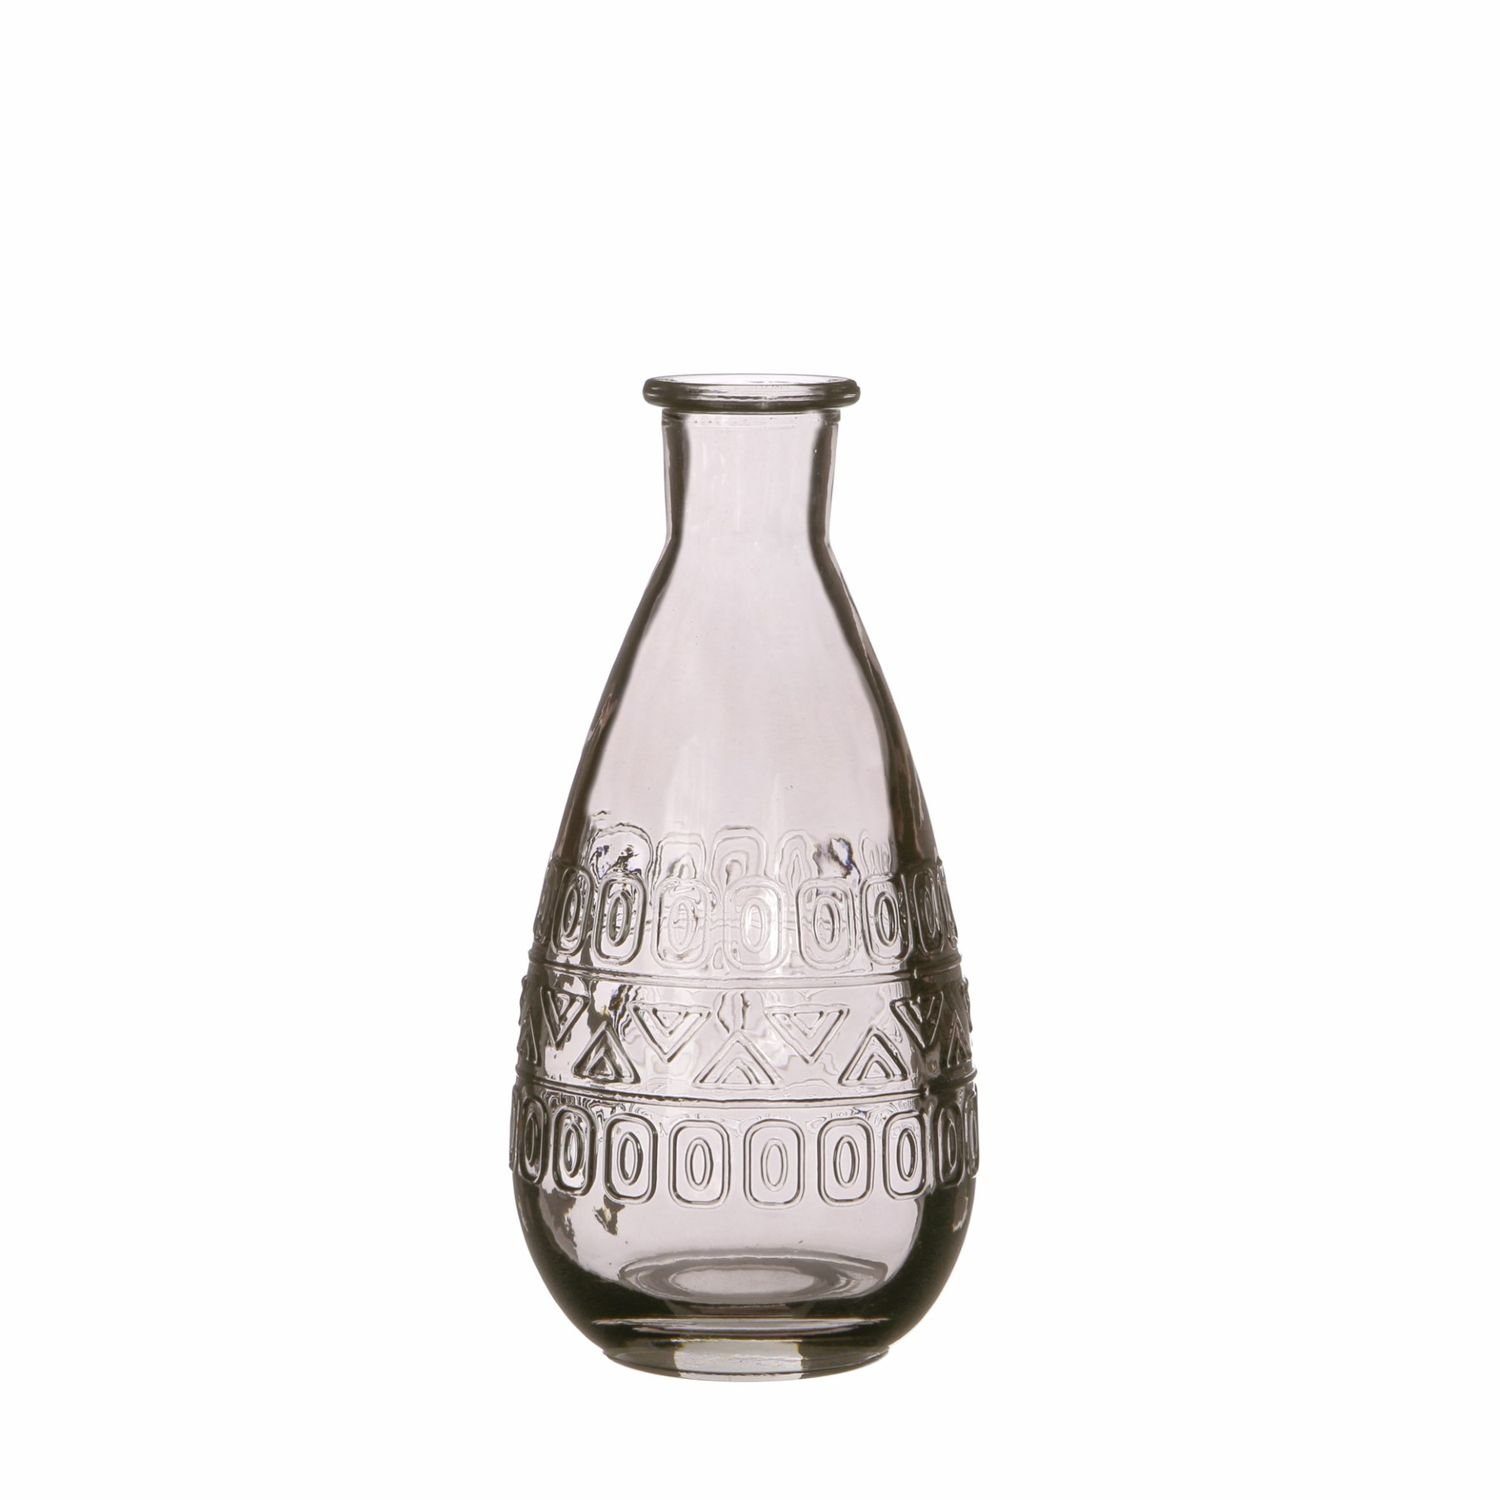 NaDeco Dekovase Glas Flasche cm Rome cm in Grau h. 15,8 Ø 7,5